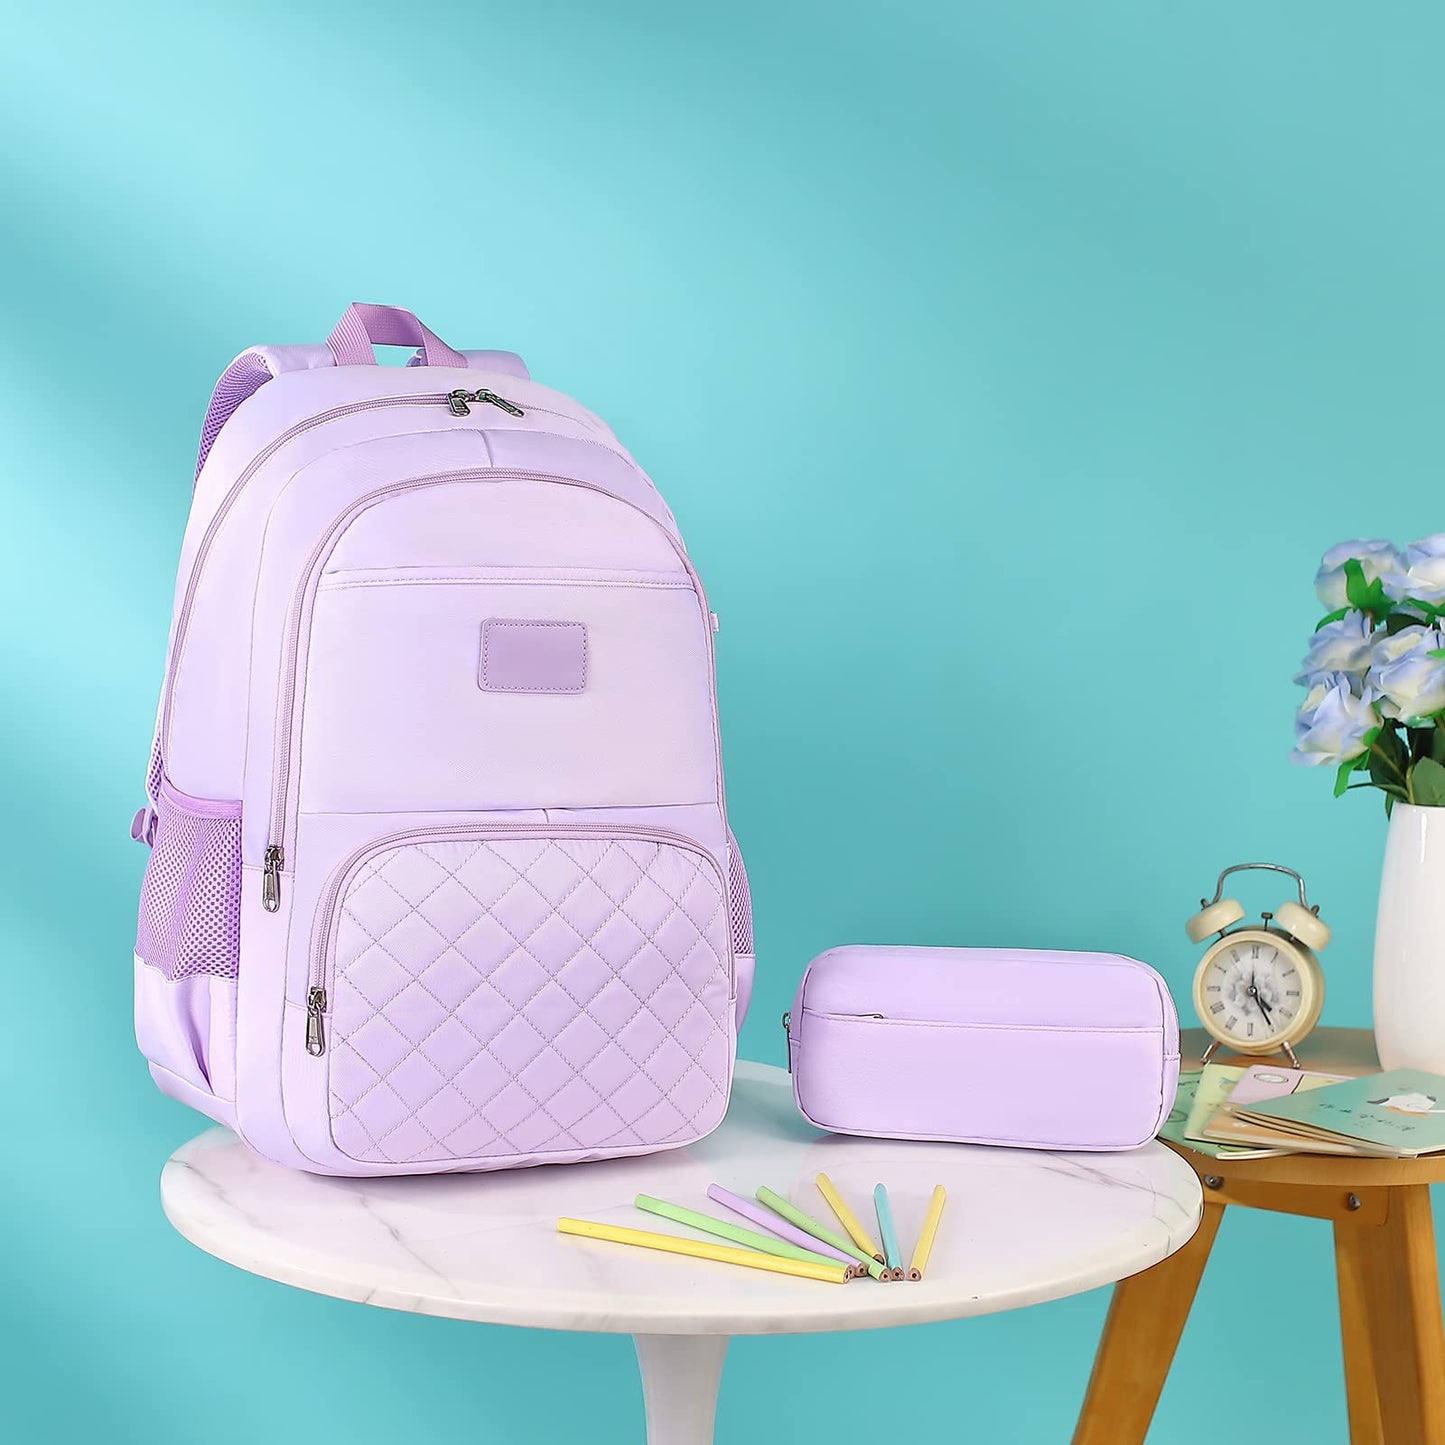 Laptop Backpack 15.6 Inch School BookBag with Pencil Case College Backpacks Teacher Work Travel Casual Daypacks for Teens Girls Women